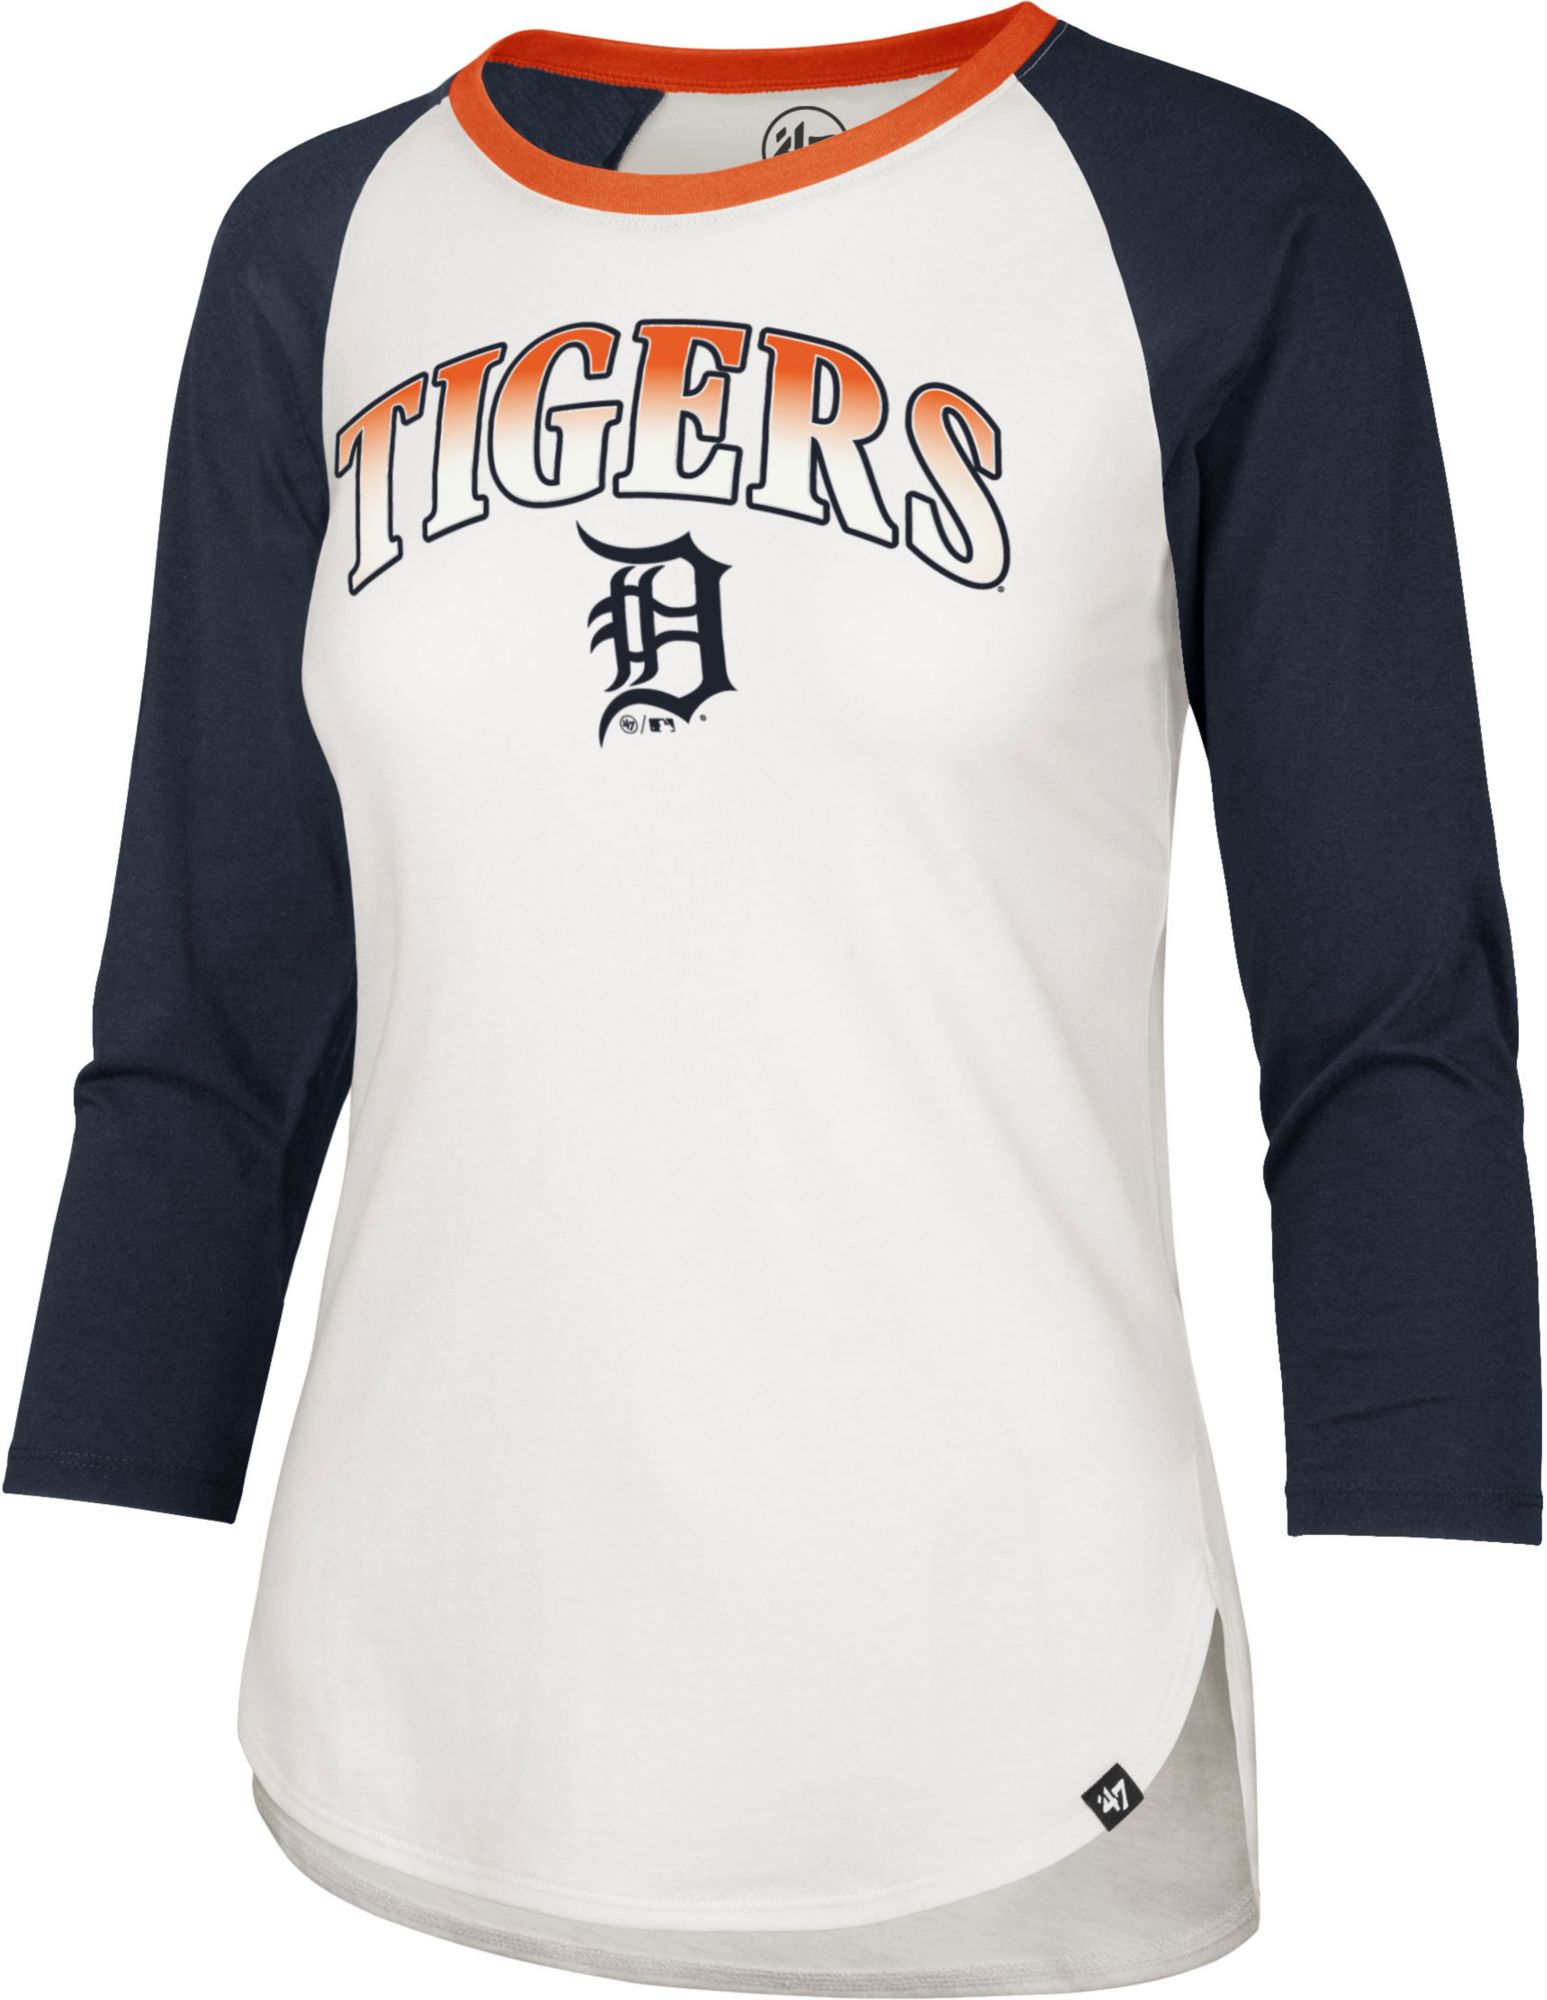 womens detroit tigers shirt